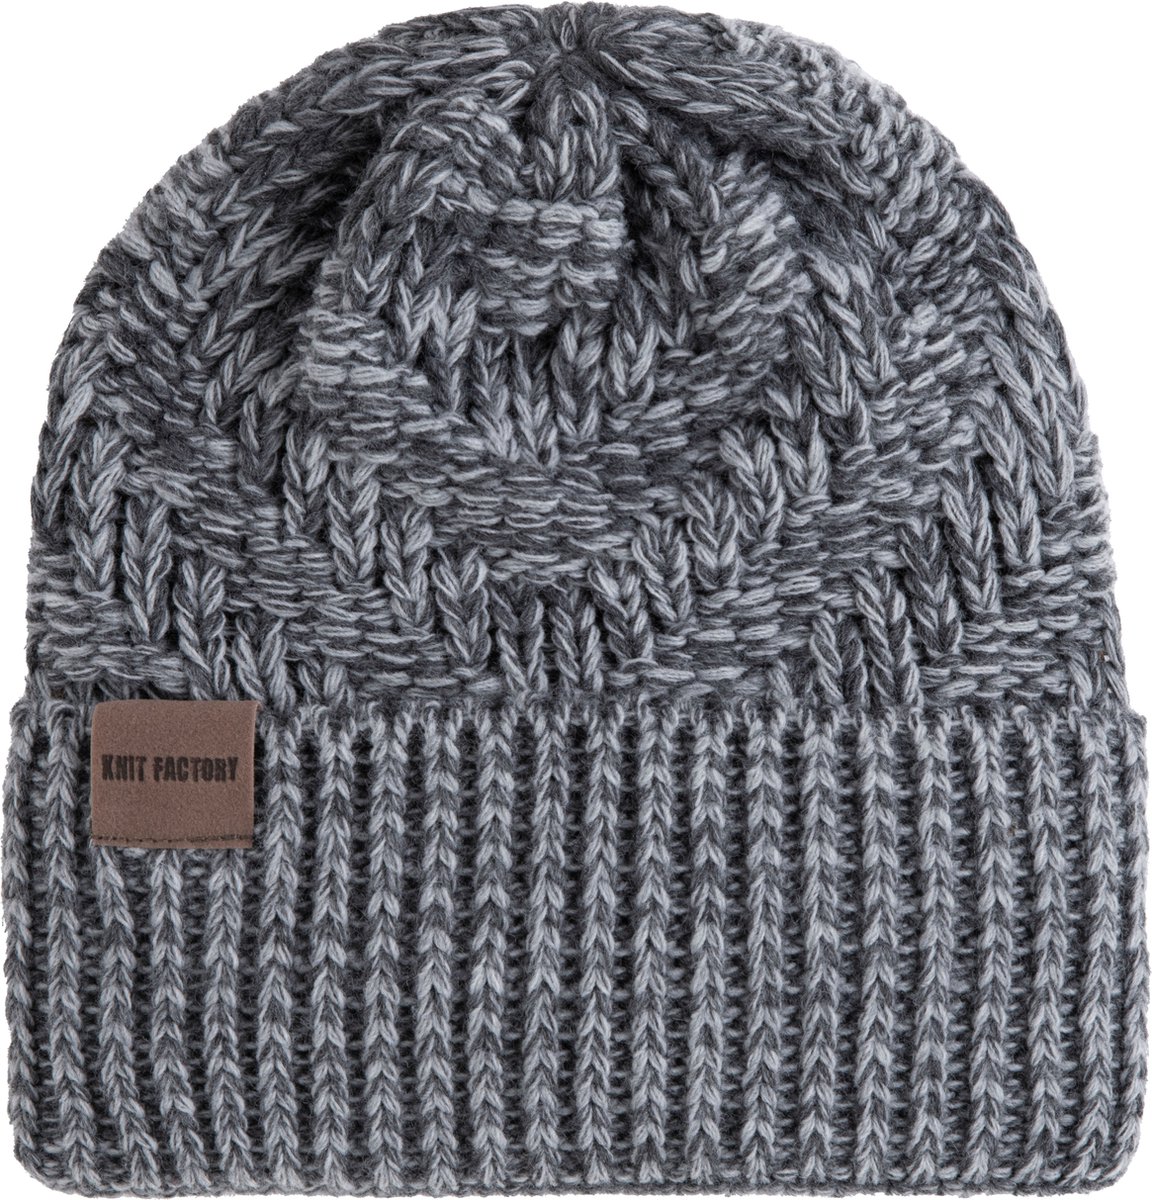 Knit Factory Sally Gebreide Muts Heren & Dames - Beanie hat - Antraciet/Licht Grijs - Grofgebreid - Warme grijs gemeleerde Wintermuts - Unisex - One Size